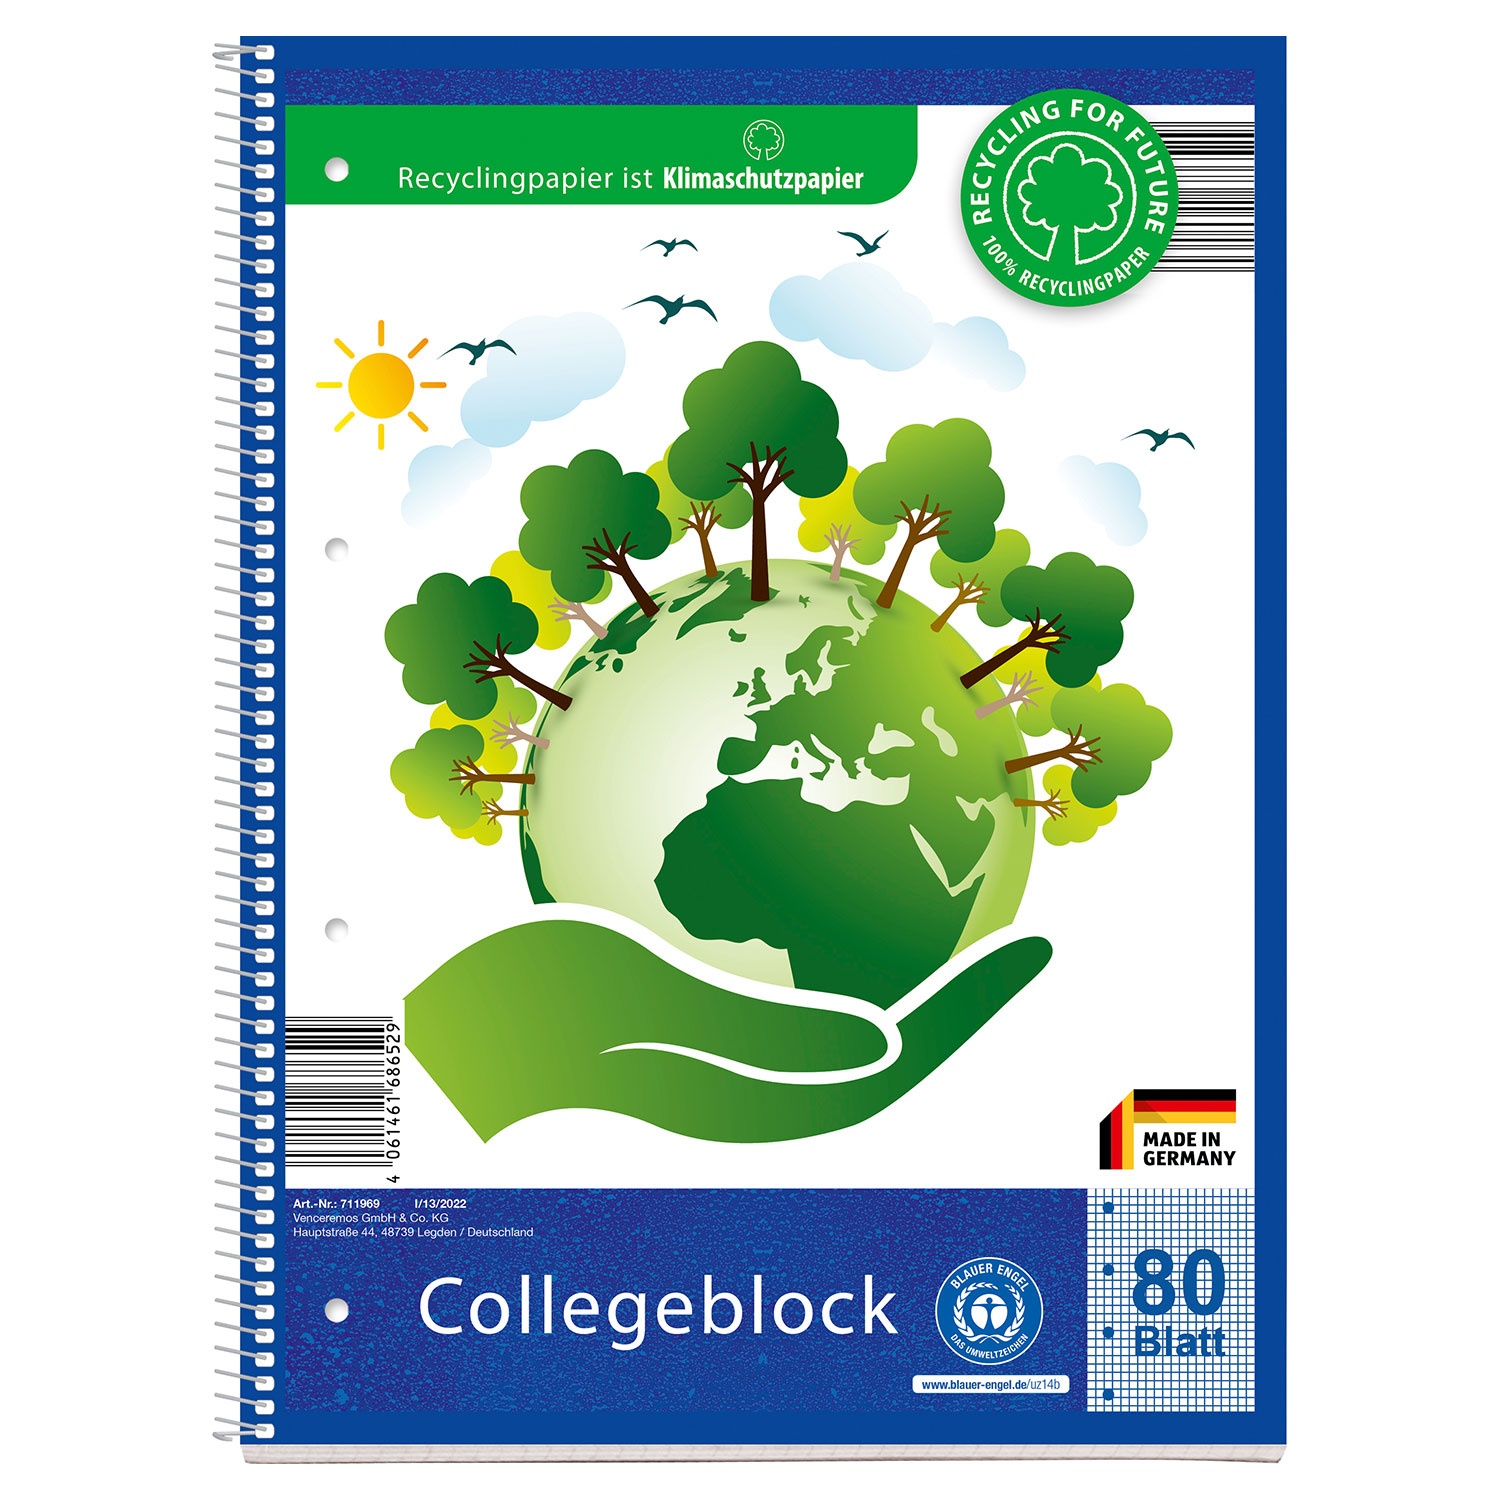 Collegeblock „Recycling for Future“